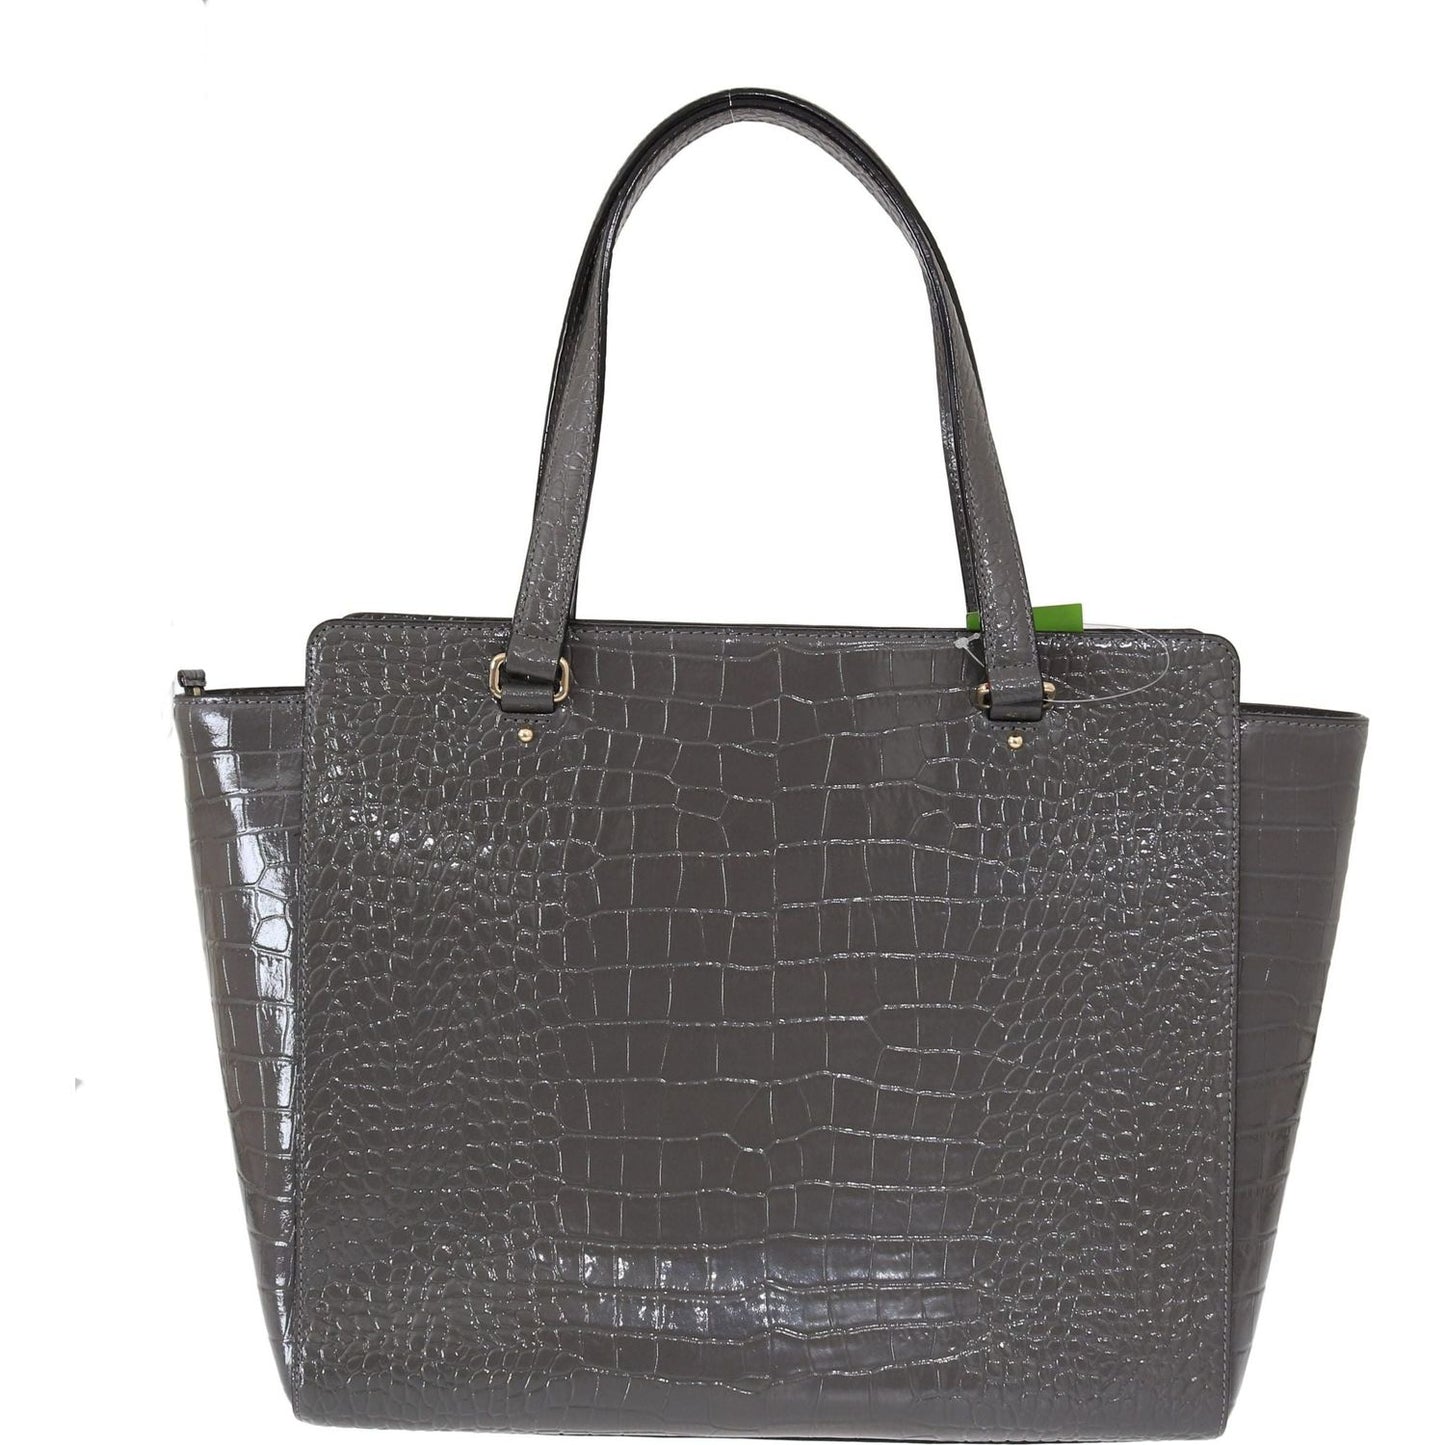 Kate Spade Chic Elissa Gray Leather Handbag WOMAN HANDBAG gray-elissa-bristol-drive-croc-hand-bag IMG_9248-1-scaled-c6393758-0d1.jpg